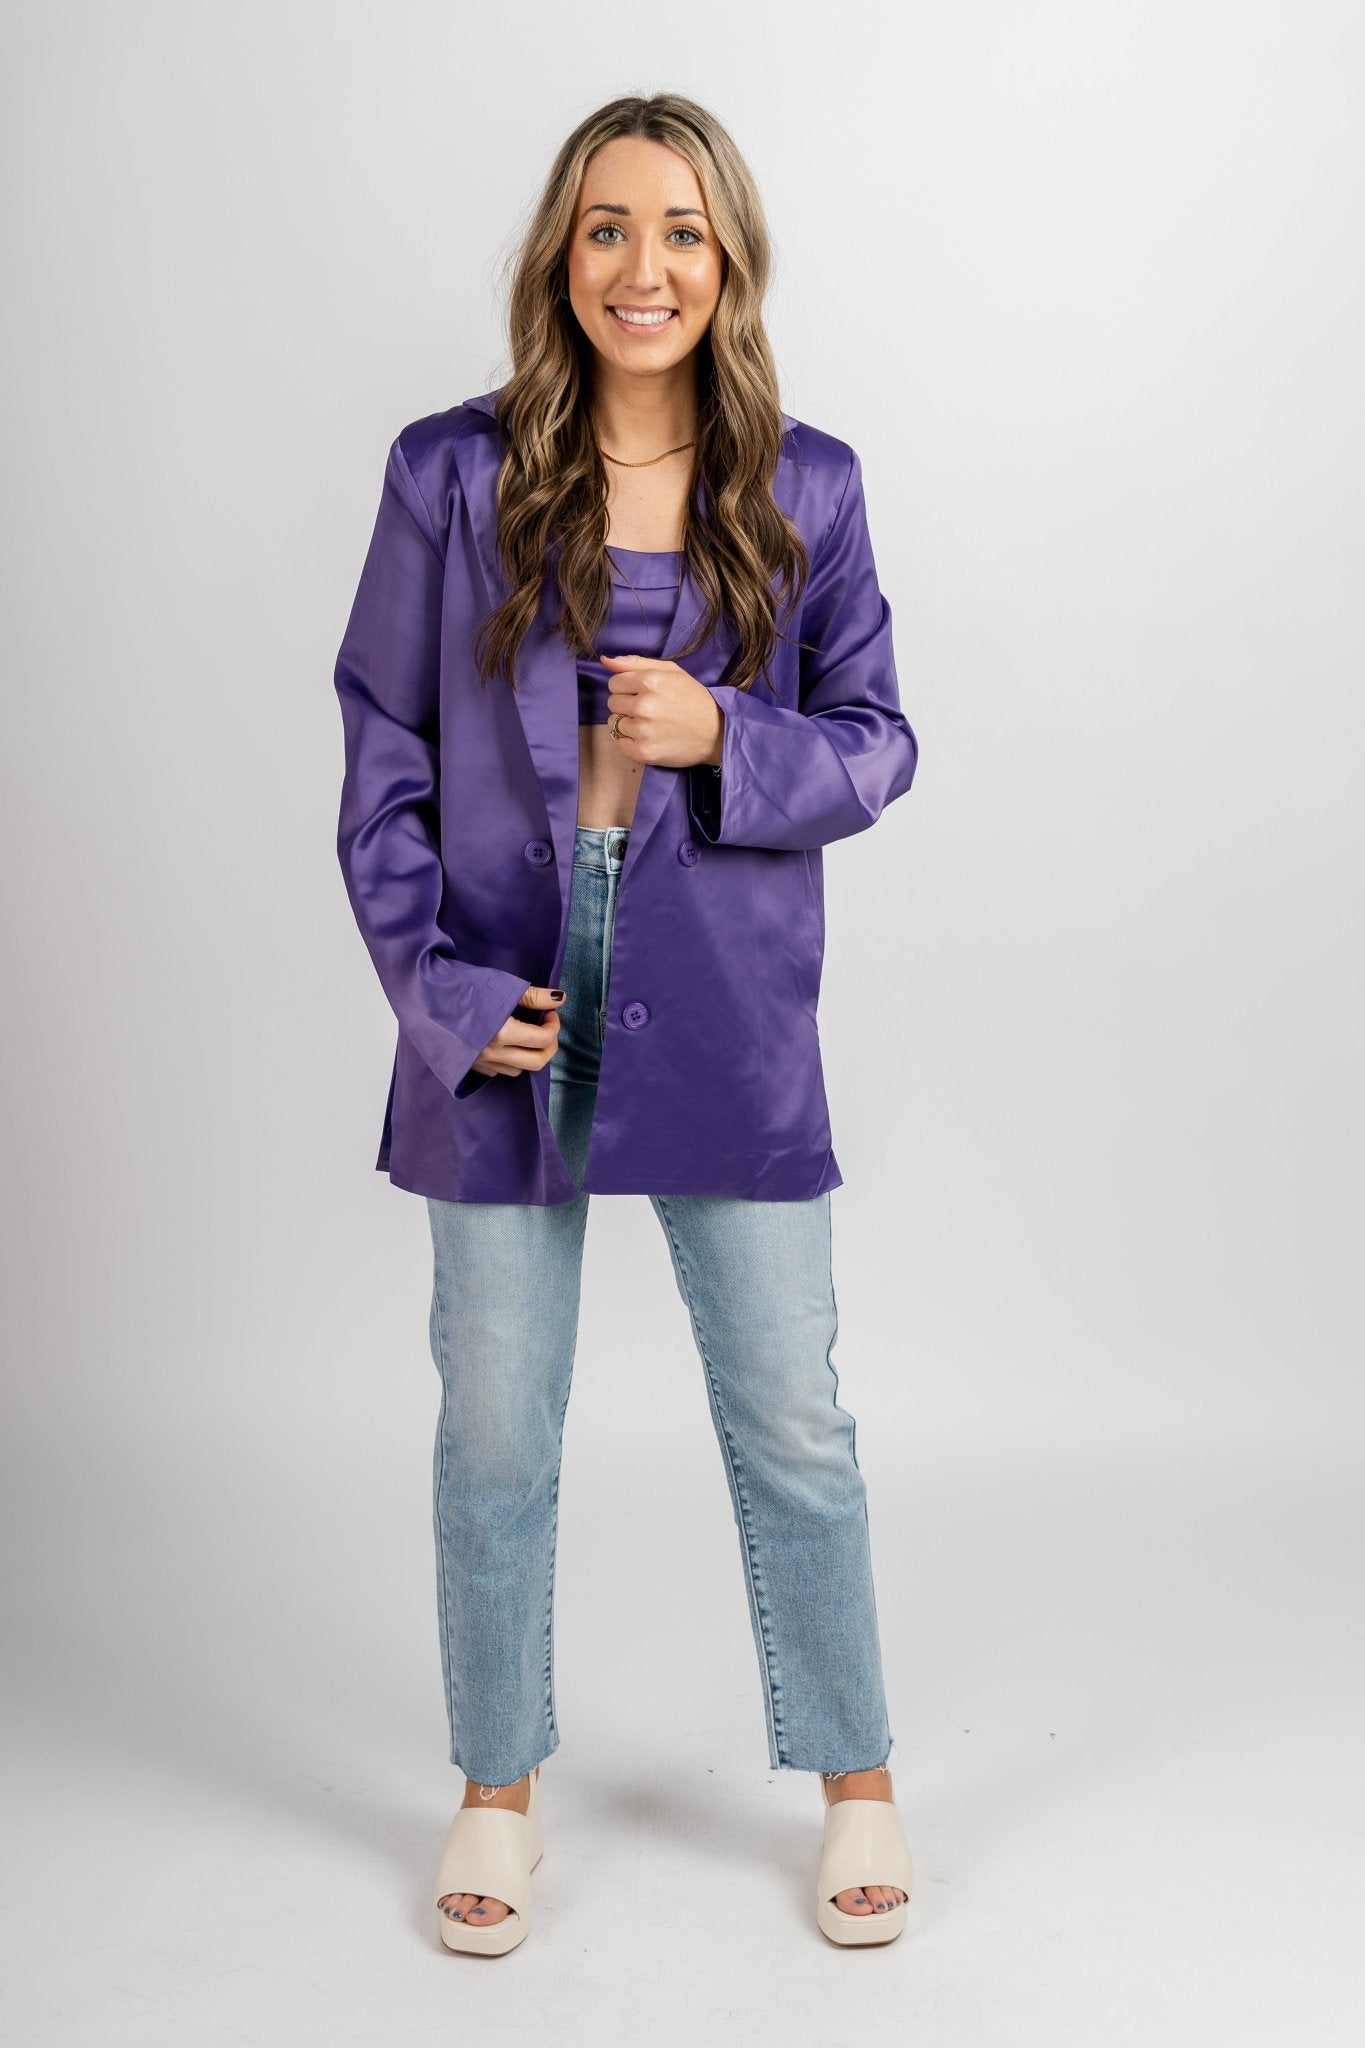 Satin blazer jacket grape Stylish blazer - Womens Fashion Jackets & Blazers at Lush Fashion Lounge Boutique in Oklahoma City